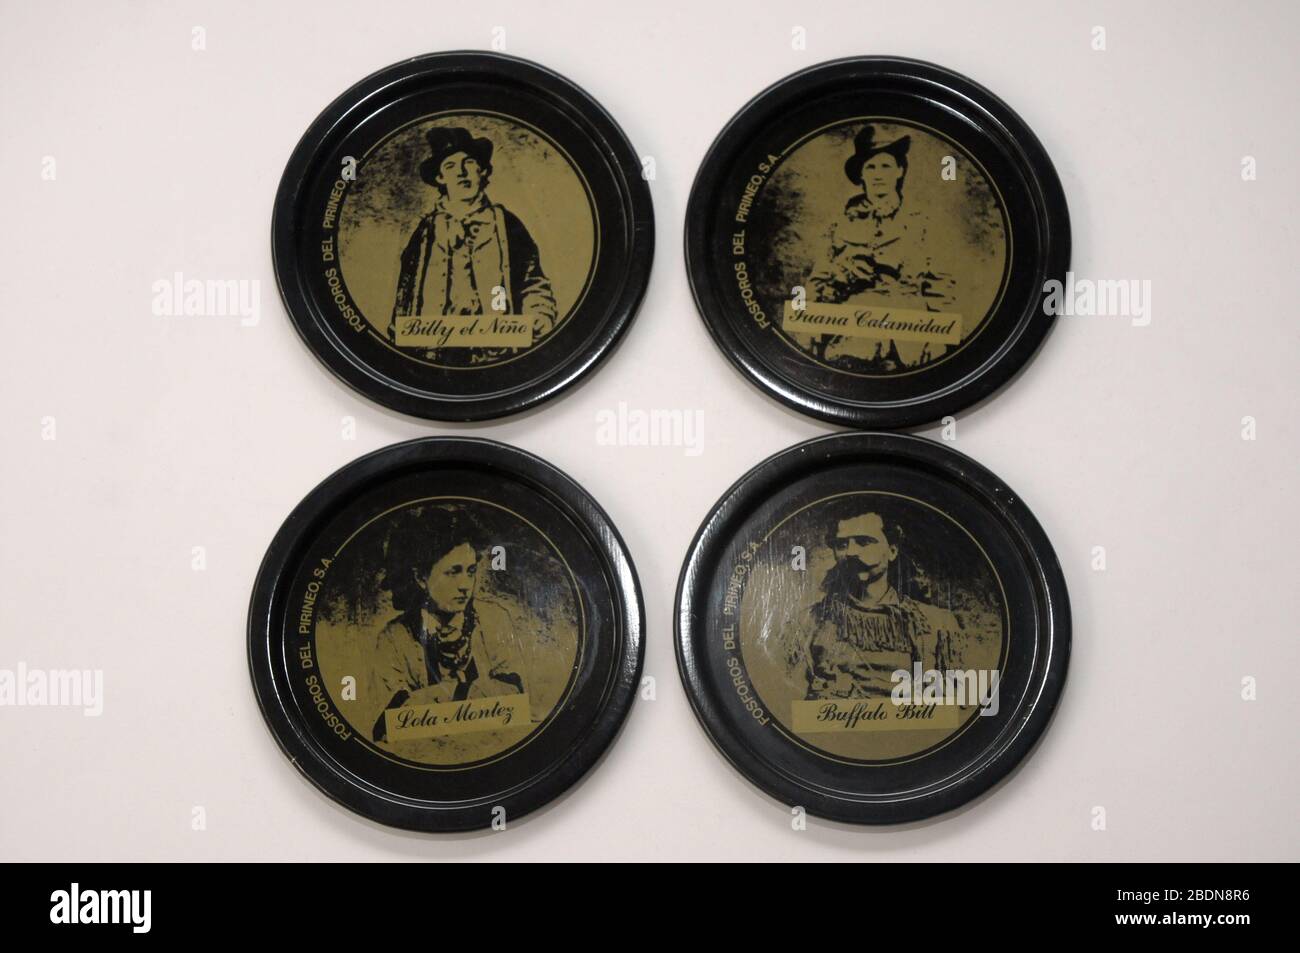 Billy el niño, Juana Calamidad, Lola Montez, Buffalo Bill Metal Coasters Stockfoto